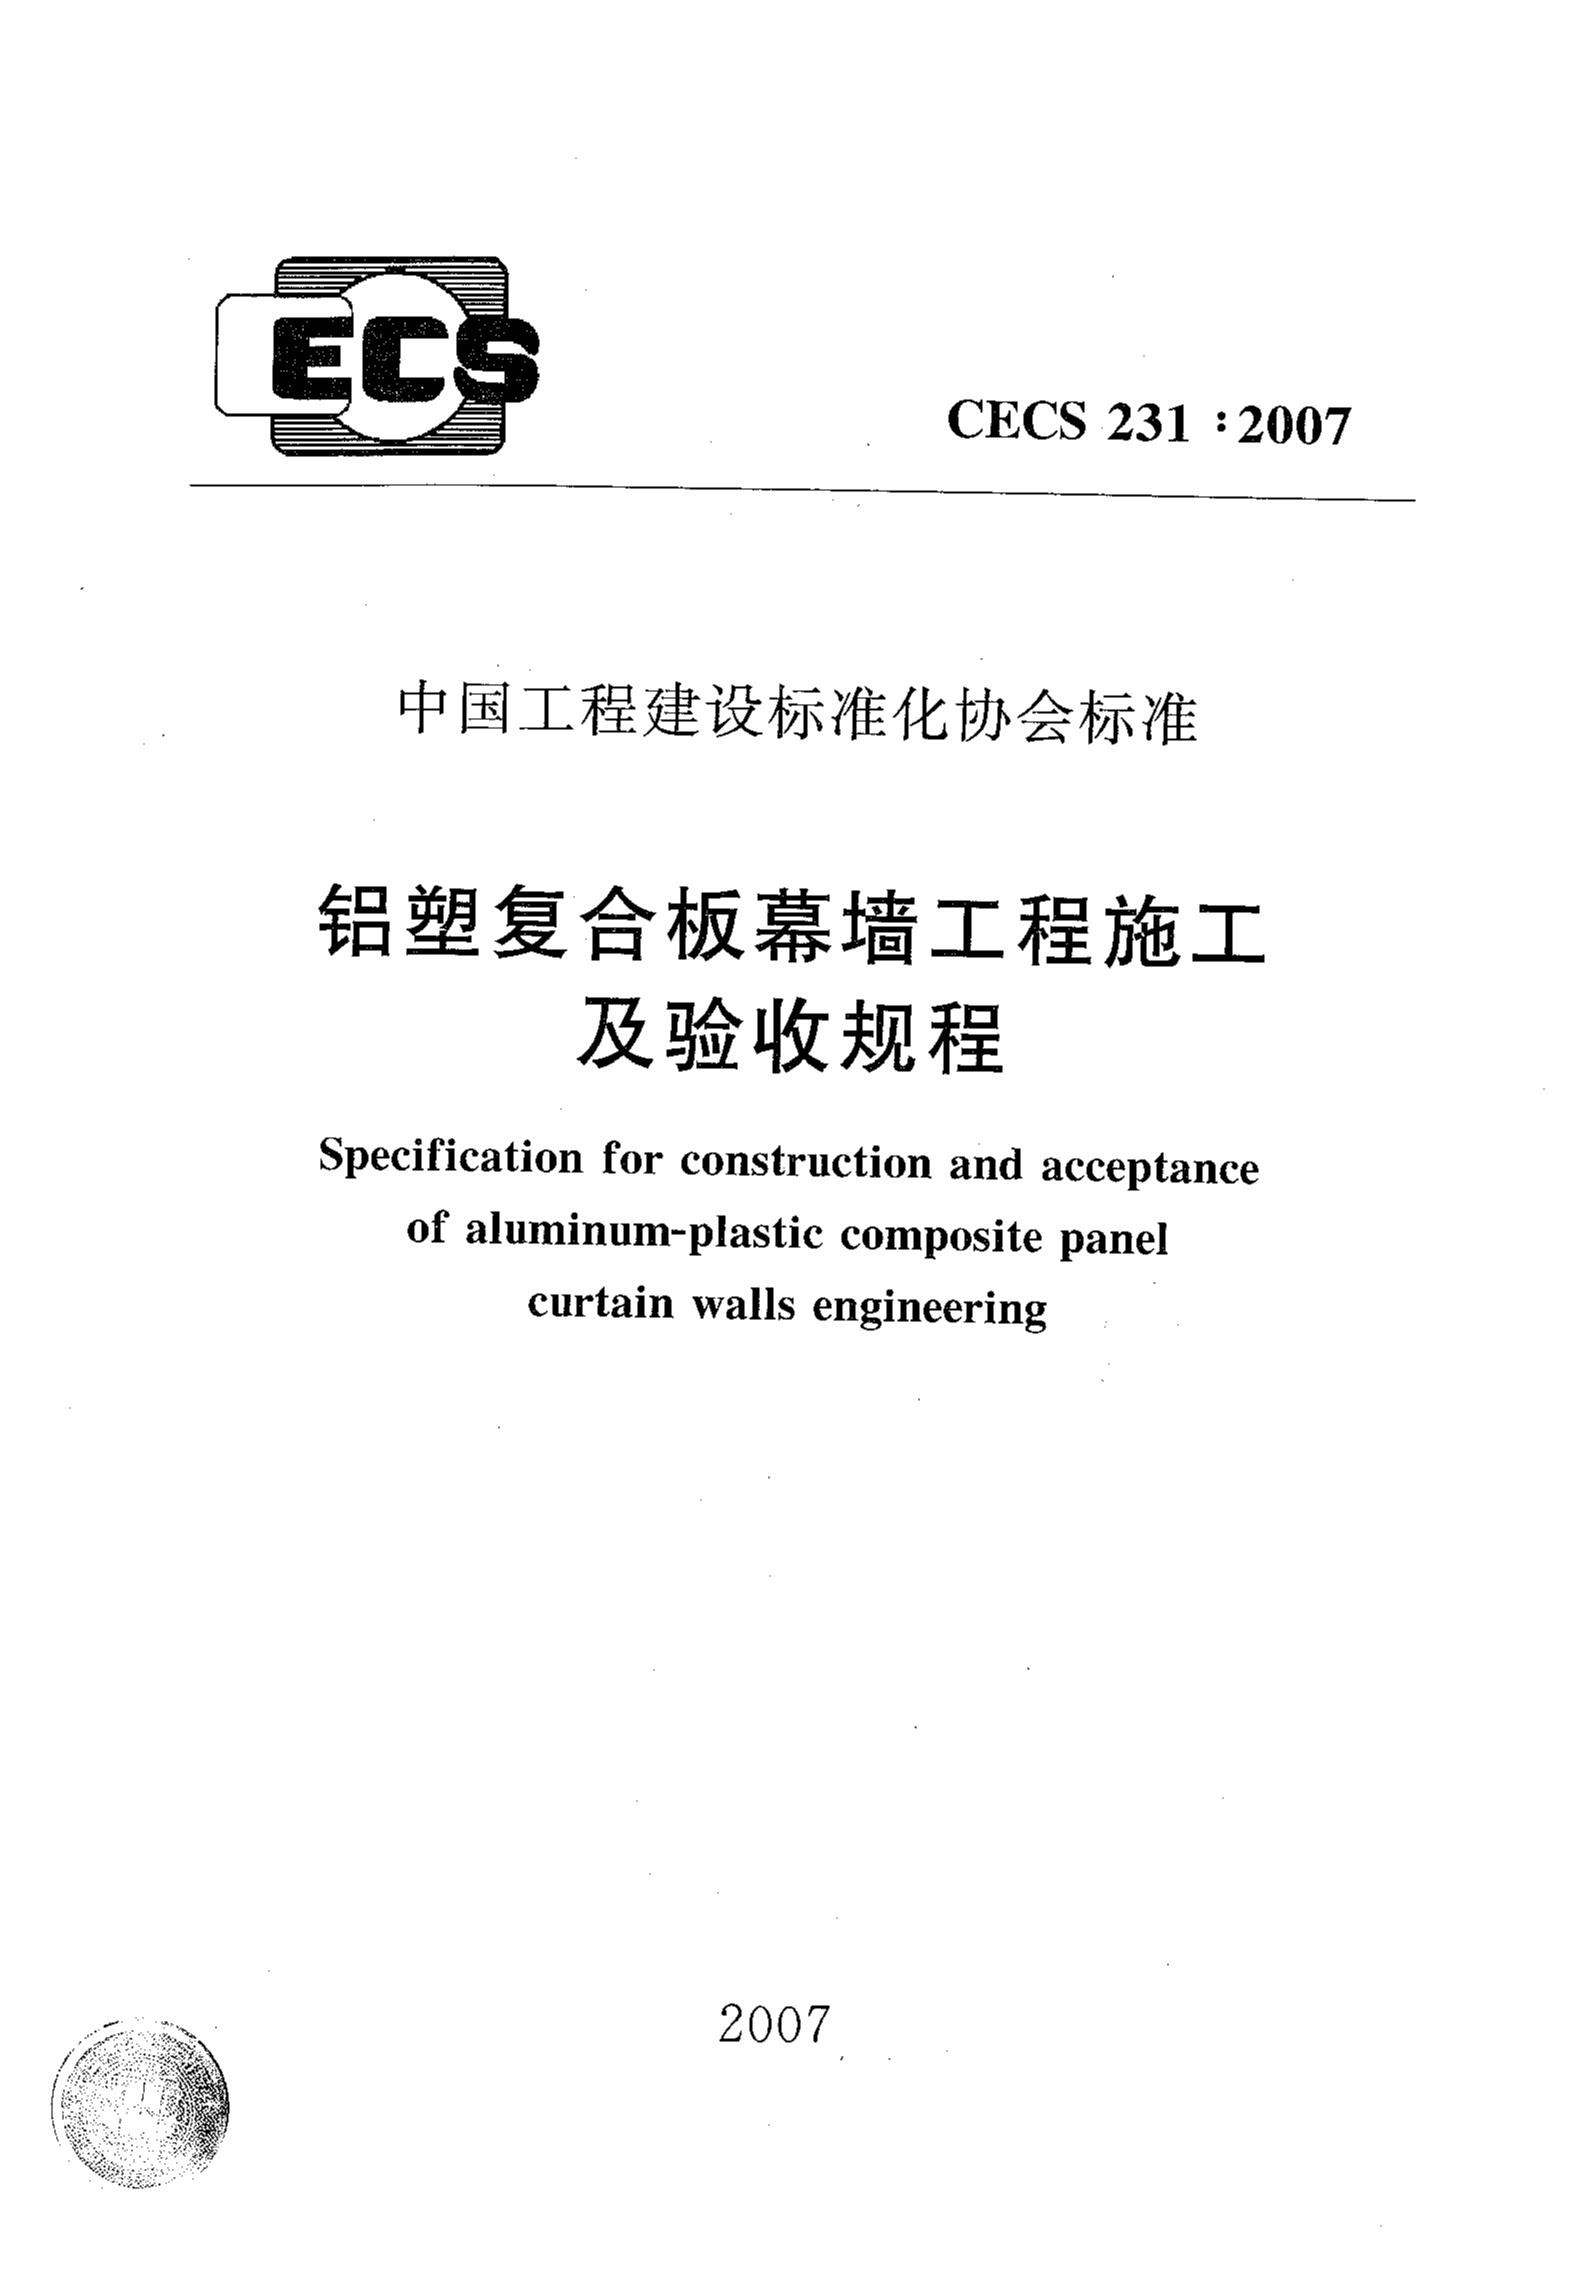 CECS 231-2007 铝塑复合板幕墙工程施工及验收规程